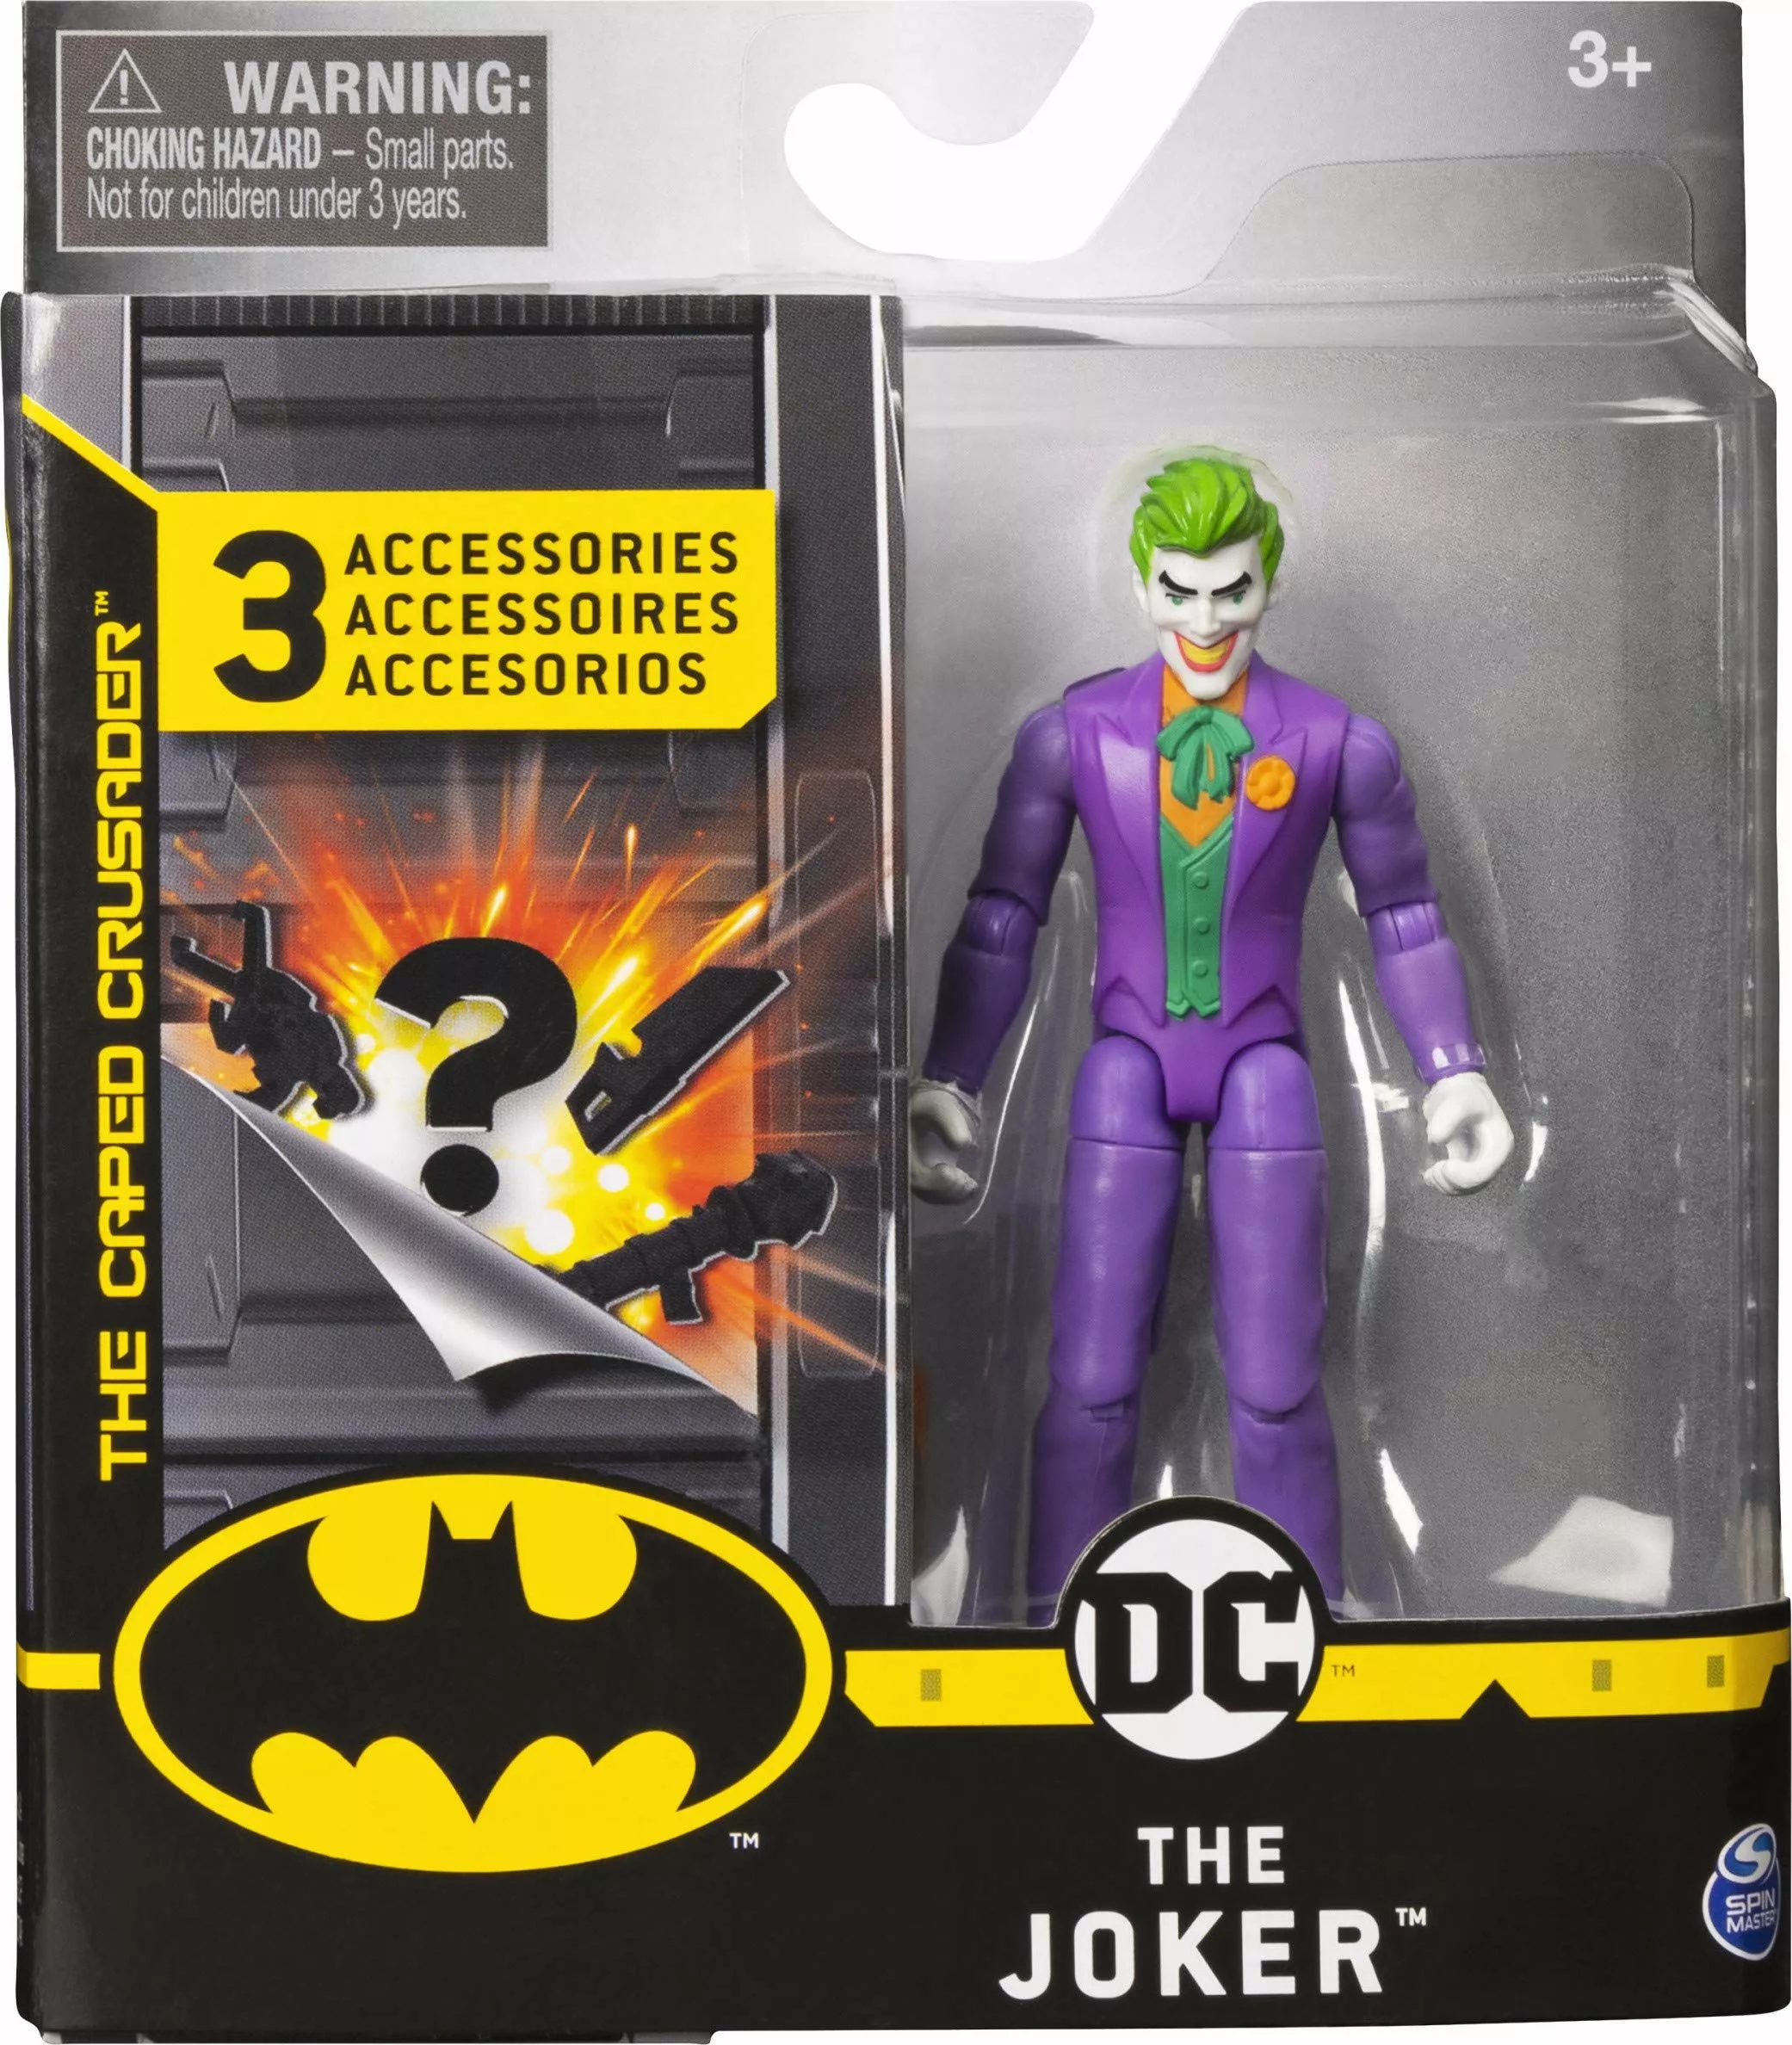 Zabawki Joker - figurki, maskotki, puzzle